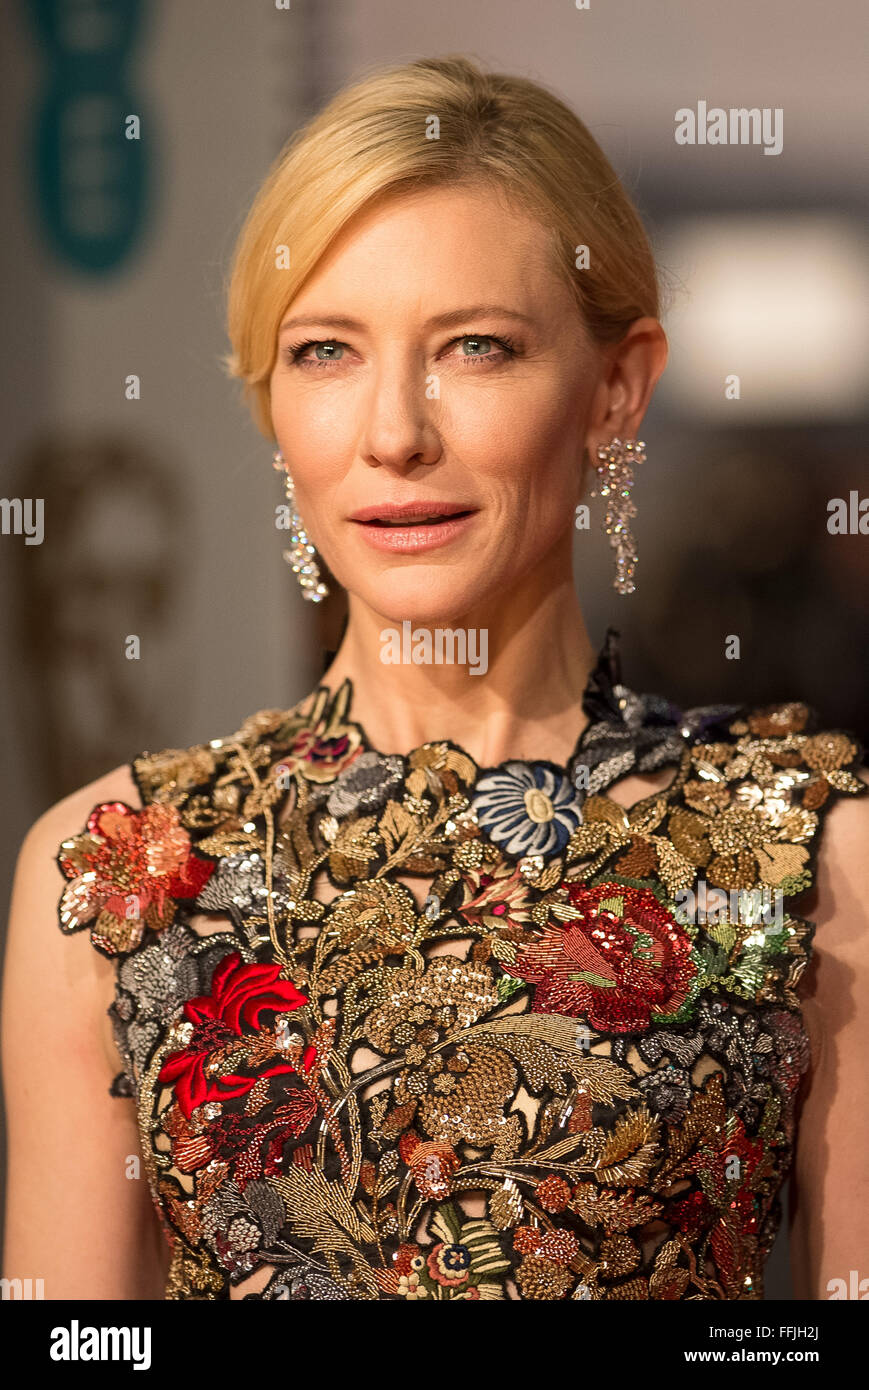 London, UK. 14. Februar 2016. Schauspielerin Cate Blanchett kommt bei den EE British Academy Film Awards, BAFTA Awards, am Royal Opera House in London, England, im 14. Februar 2016. Bildnachweis: Dpa picture Alliance/Alamy Live News Stockfoto